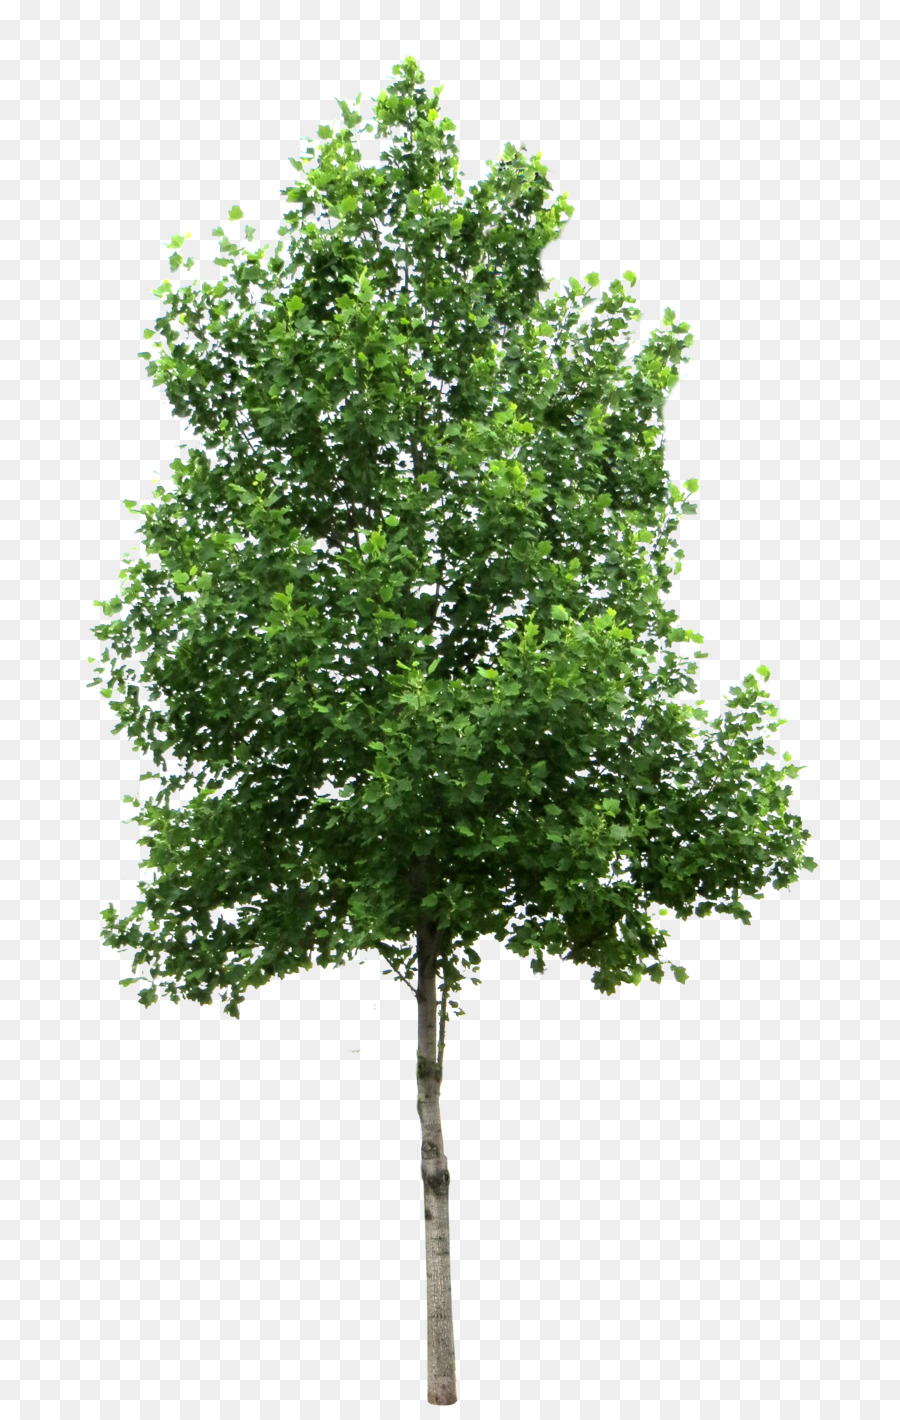 Tree Birch Clip art - Tree PNG Transparent Images png download - 2079*3249 - Free Transparent Tree png Download.